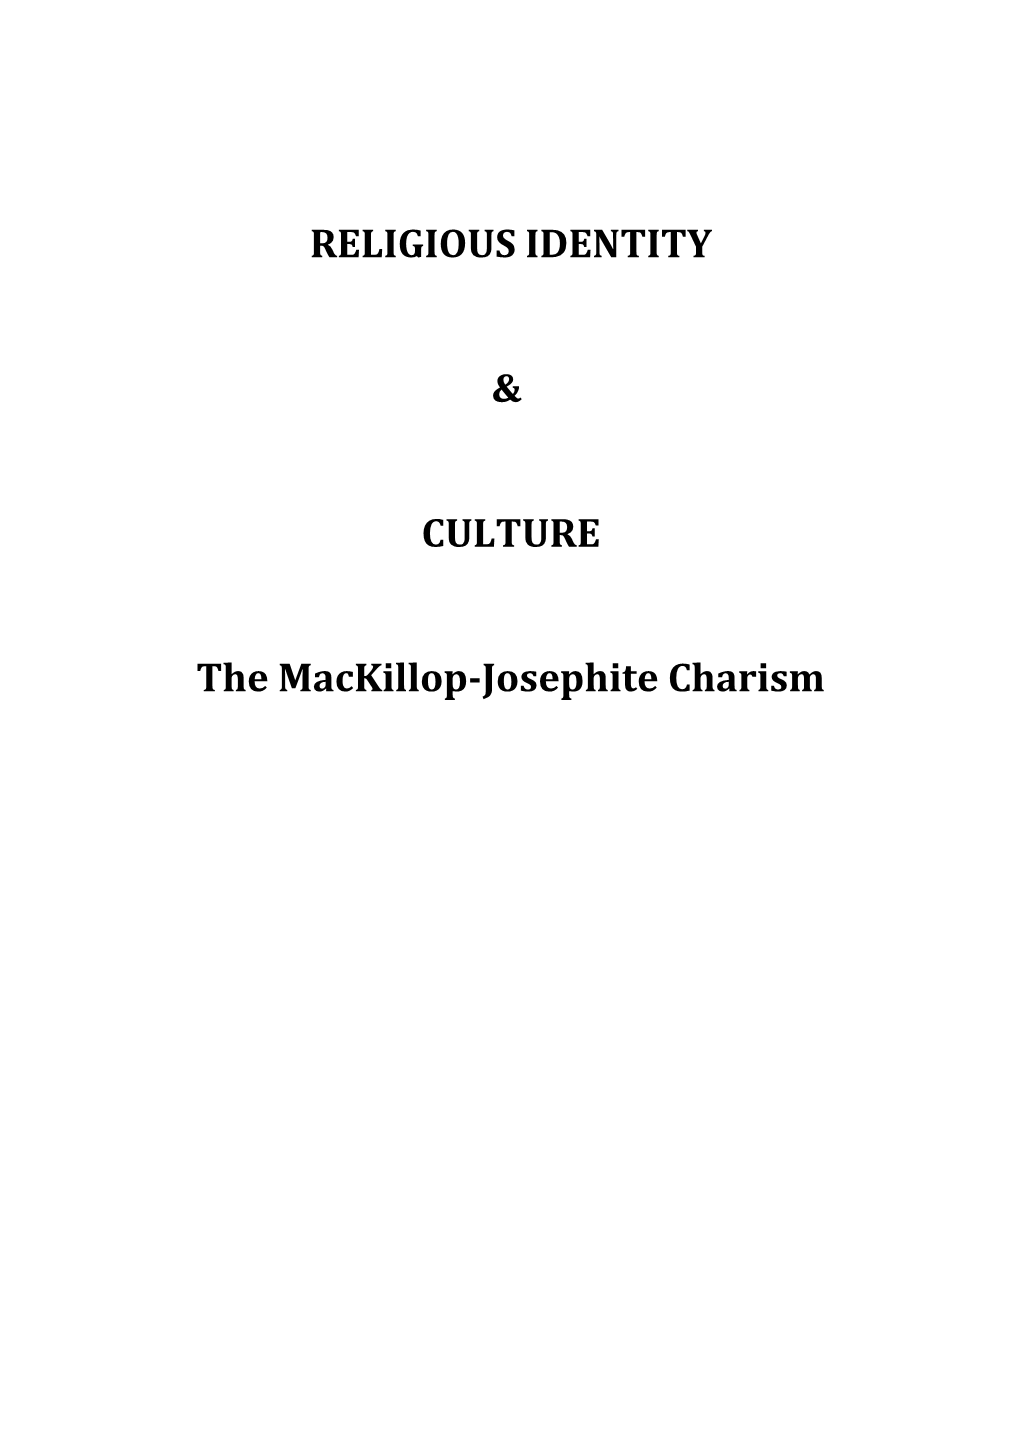 The Mackillop-Josephite Charism